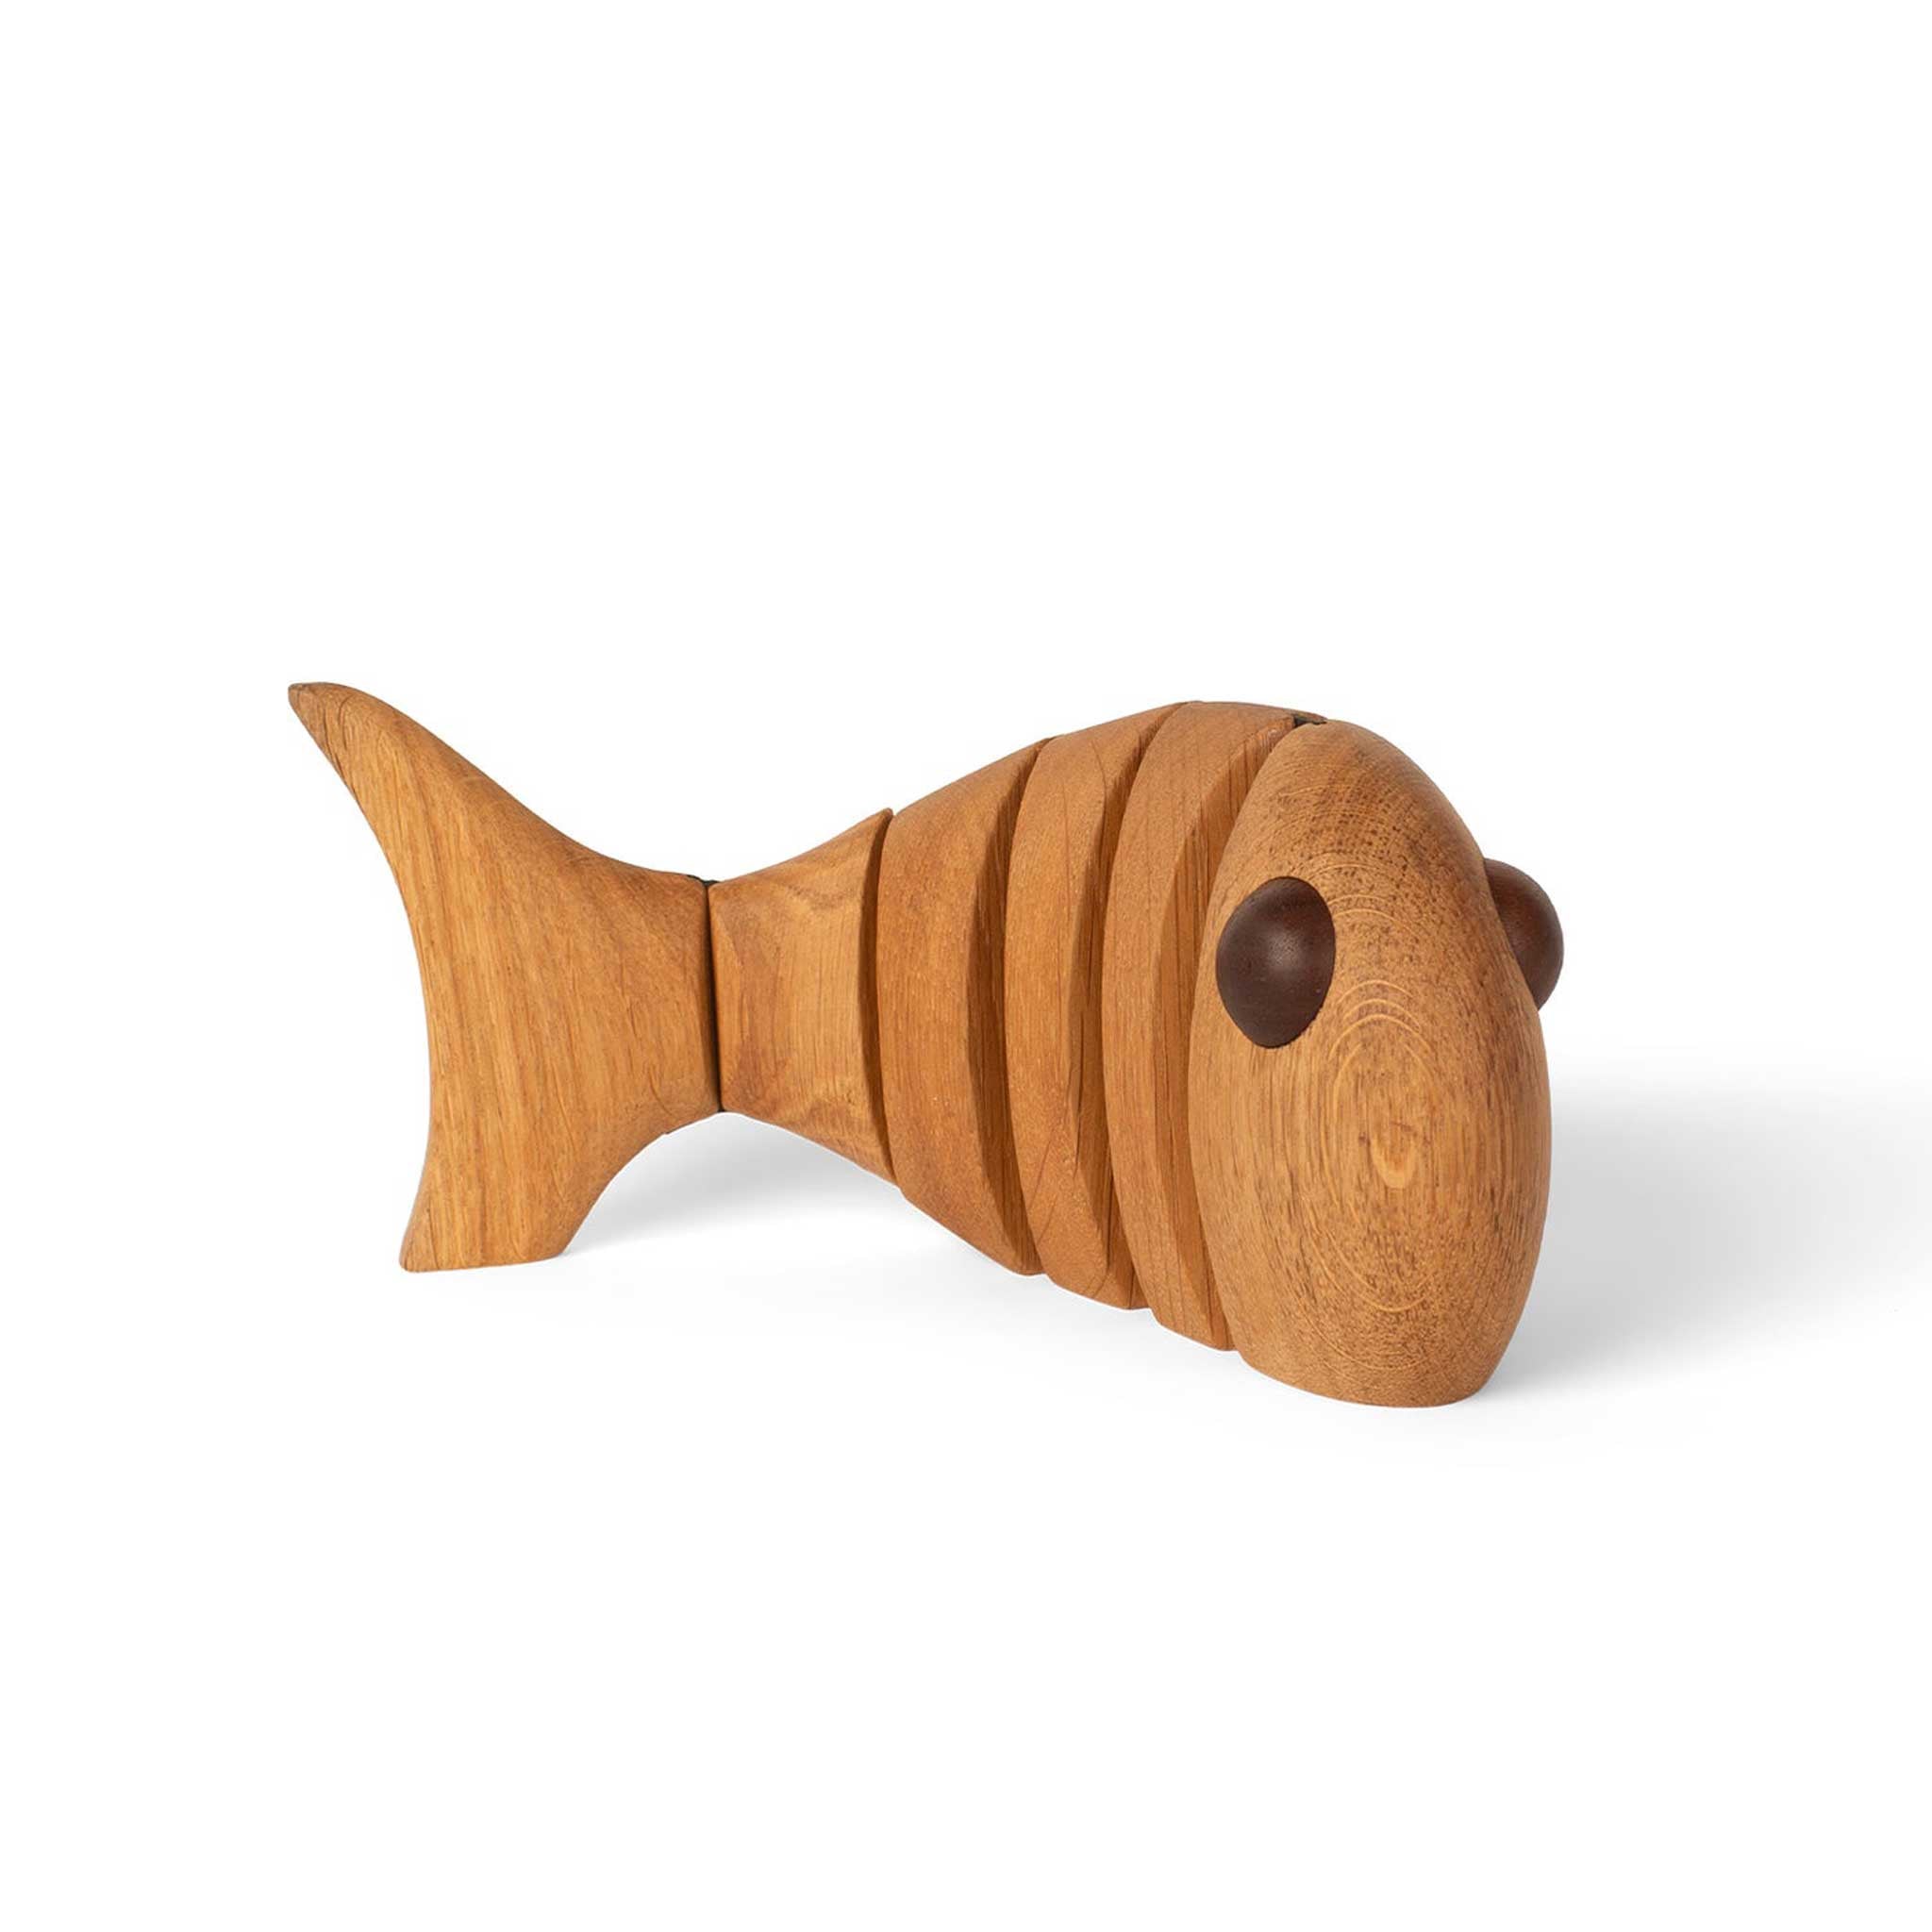 THE WOOD FISH Mega | huge wooden FISH 44 cm | mencke&vagnby | Spring Copenhagen